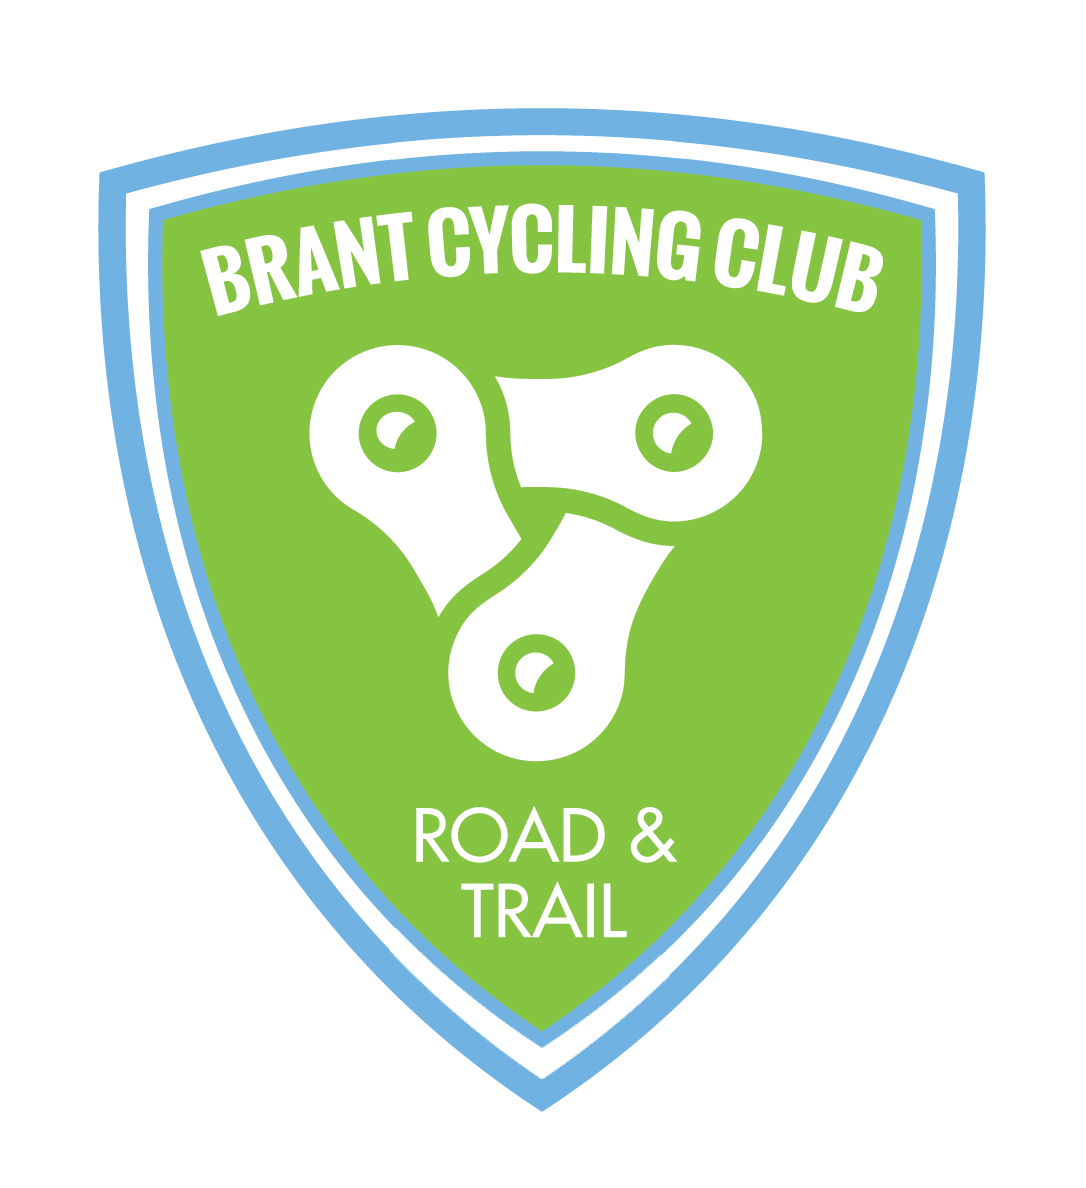 Brant Cycling Club Road & Trail